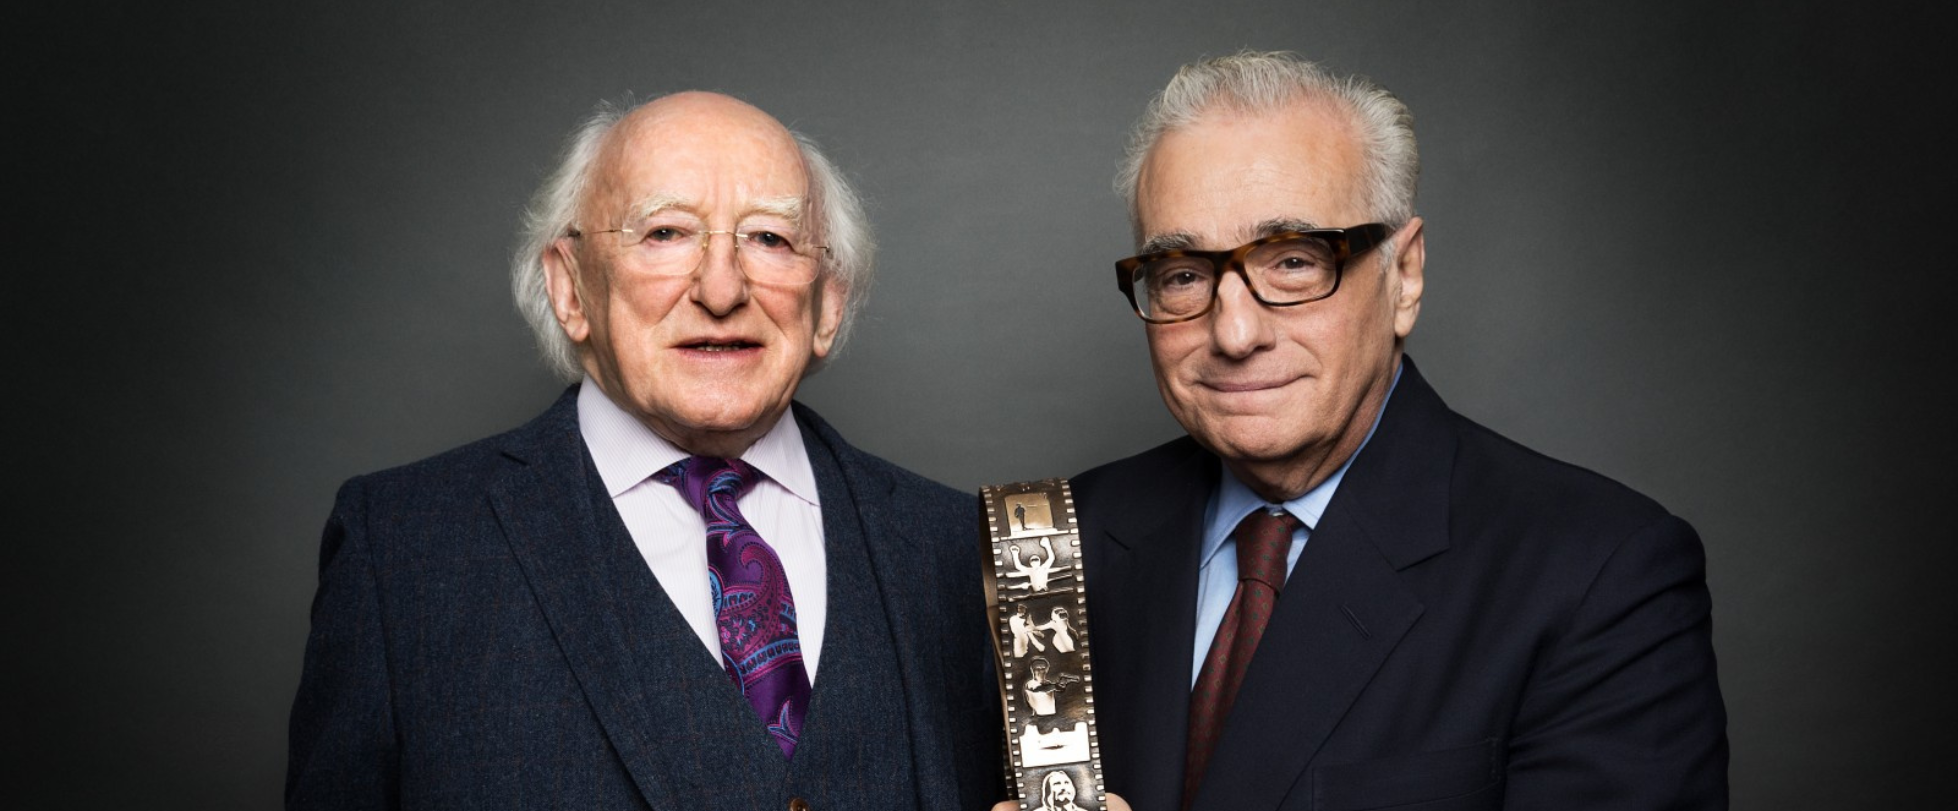 Martin Scorsese Receives John Ford Award